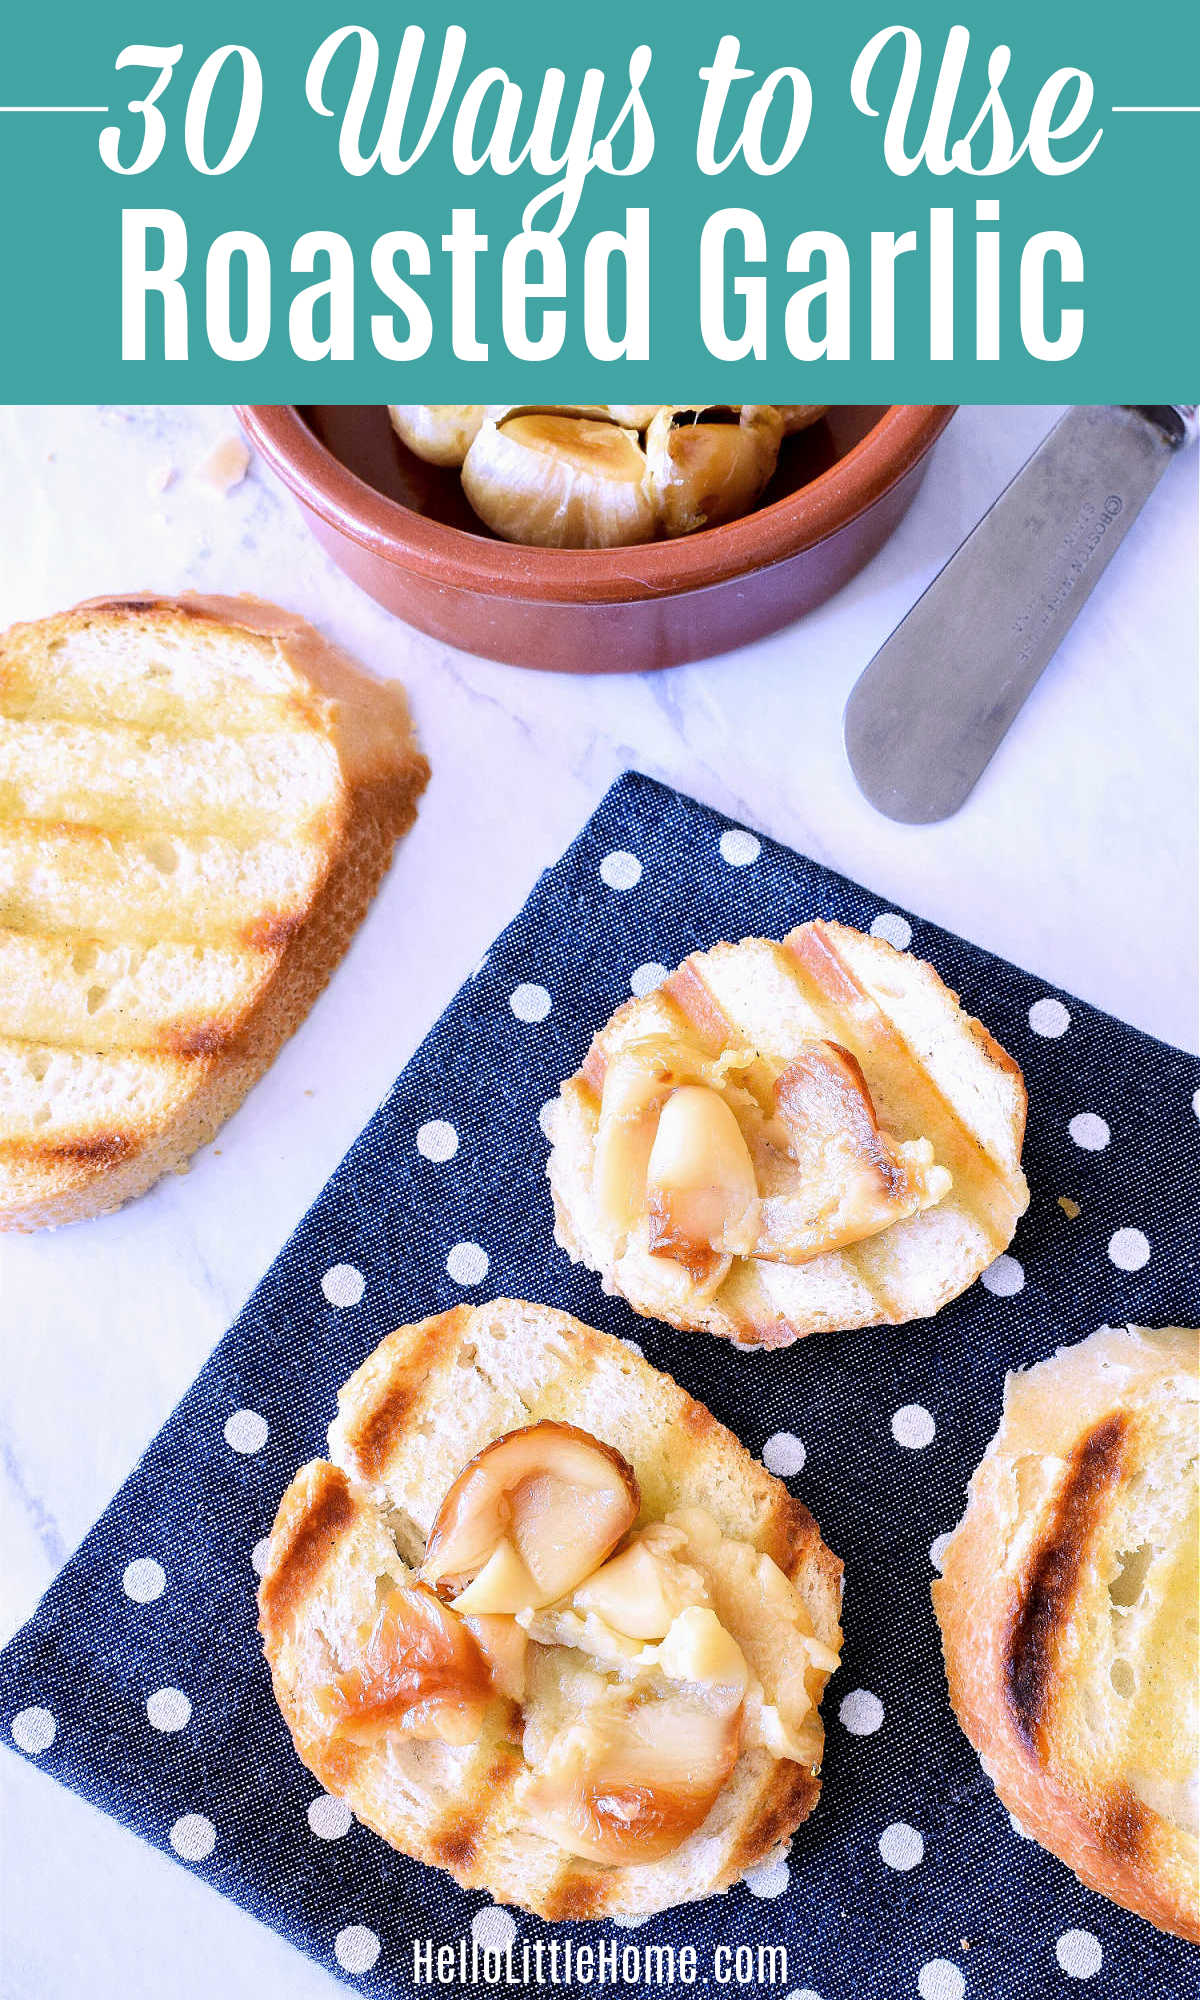 Bread slices spread with roasted garlic on a polka dot napkin.